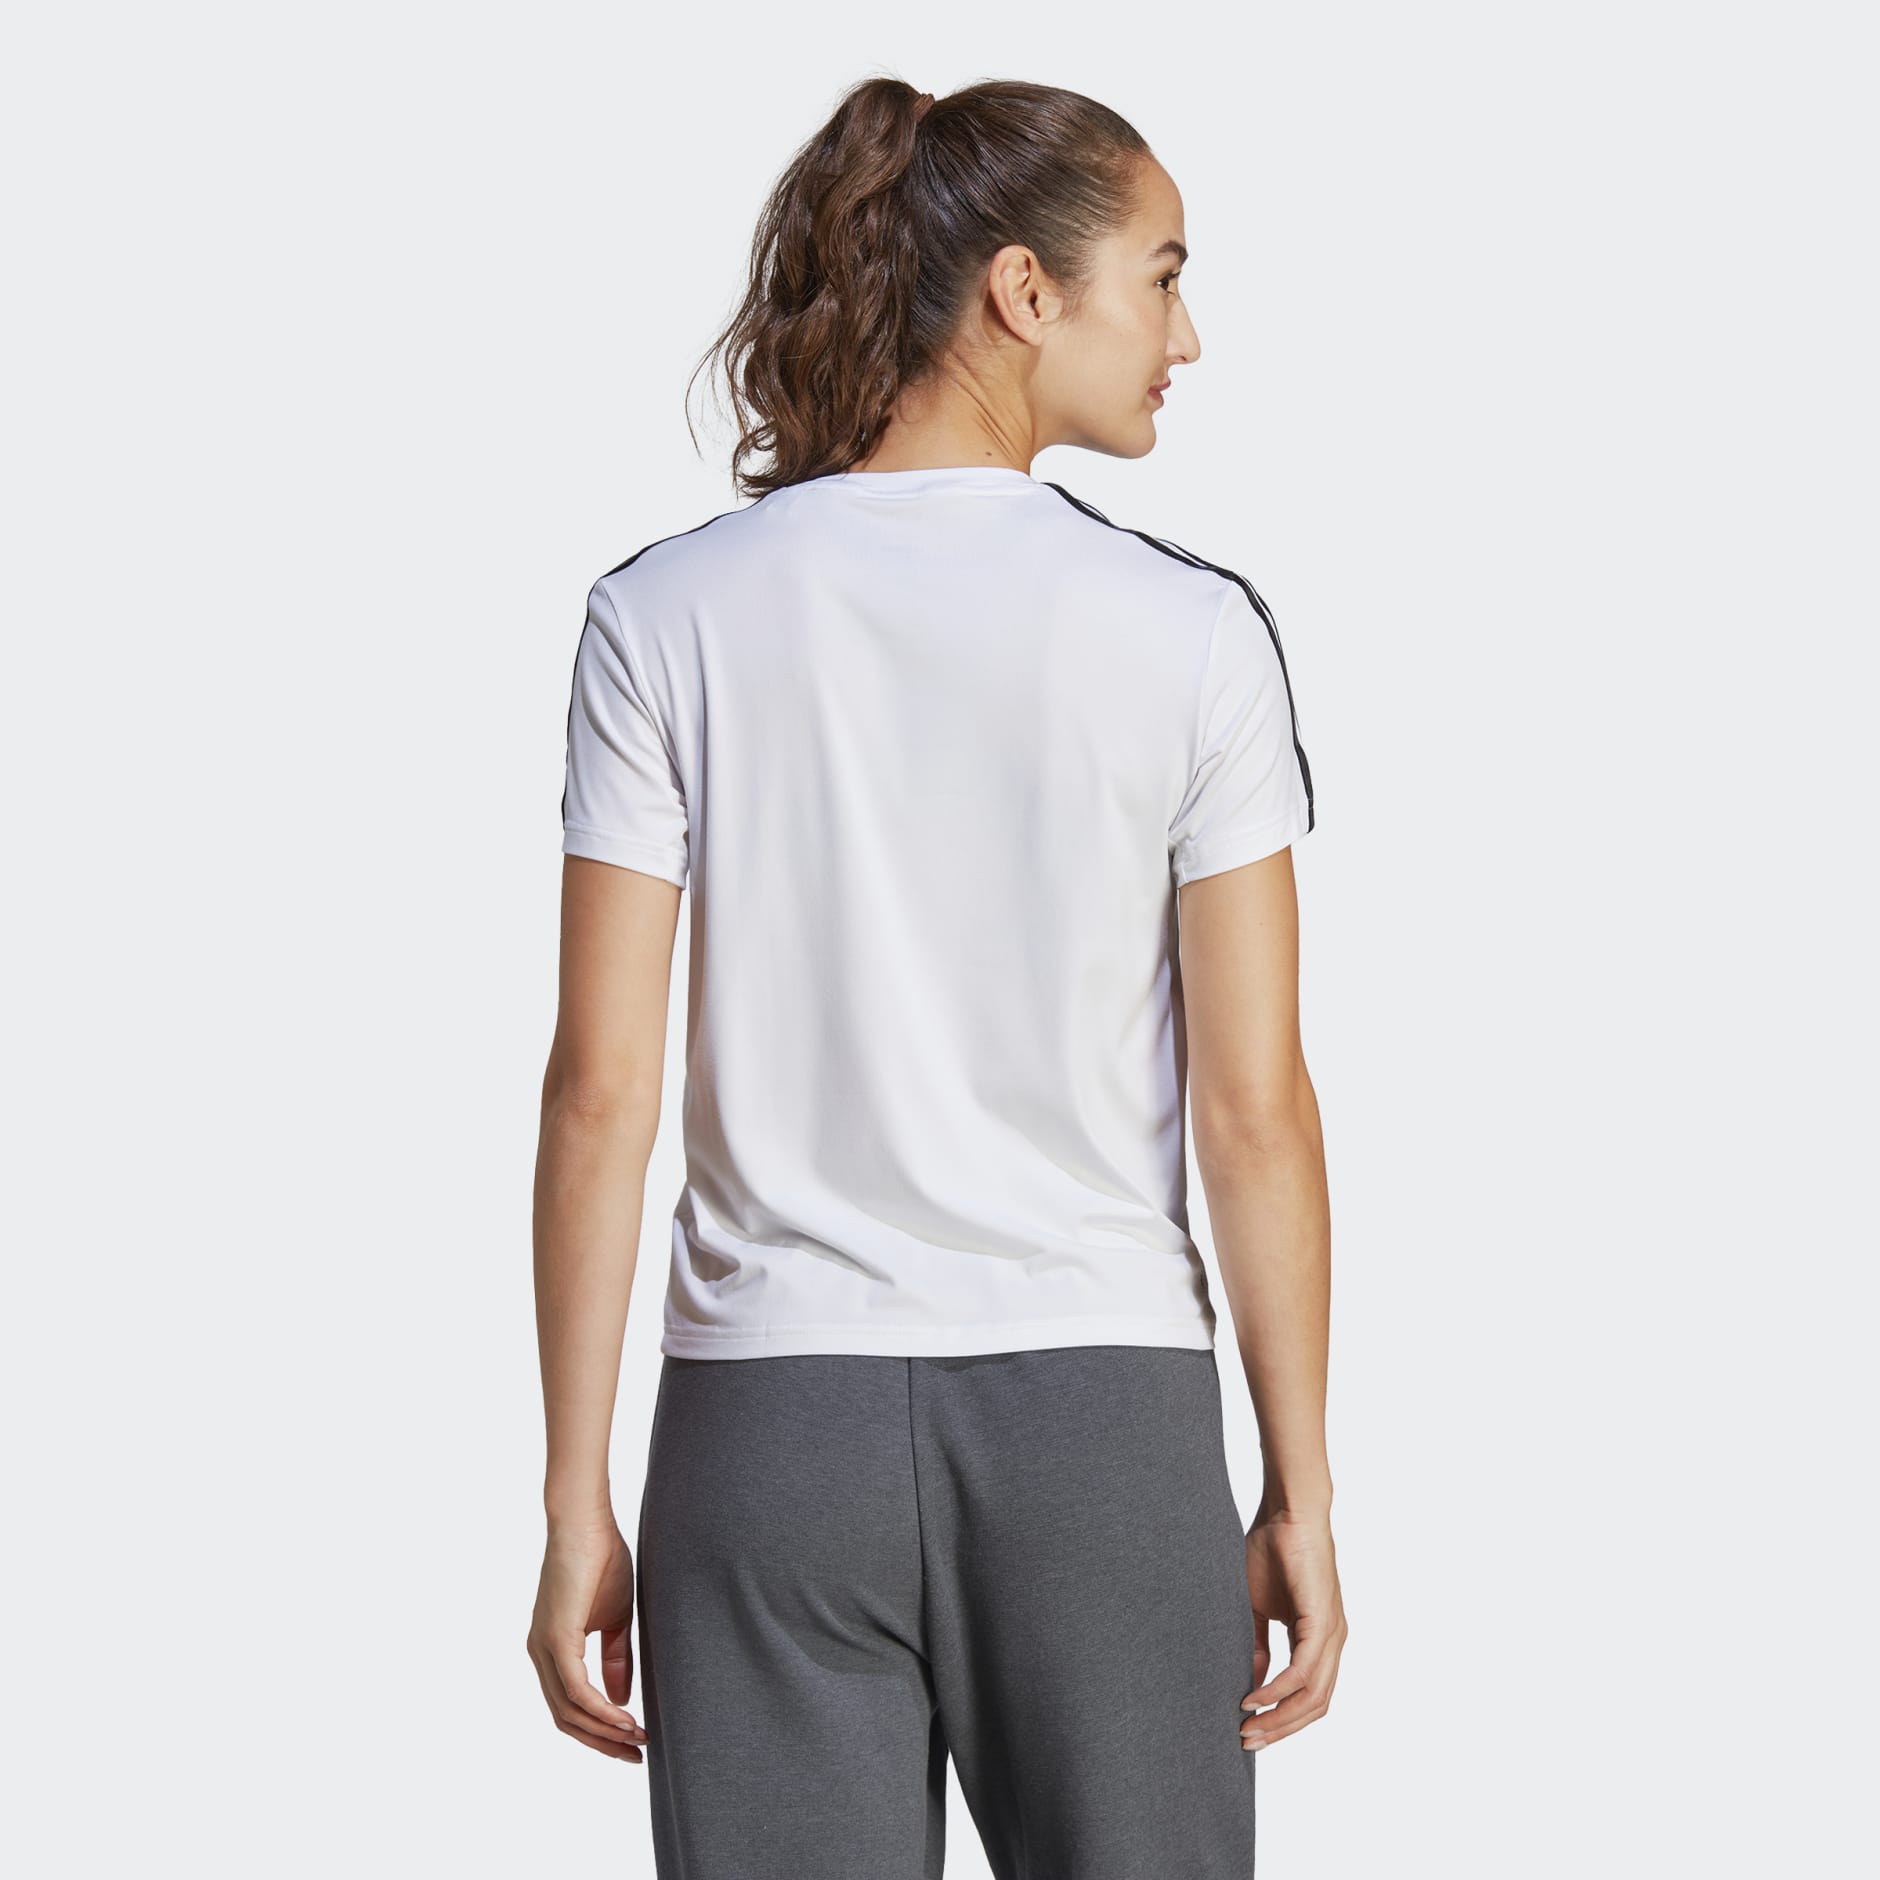 Women's Clothing - AEROREADY Train Essentials 3-Stripes Tee - White | adidas  Qatar